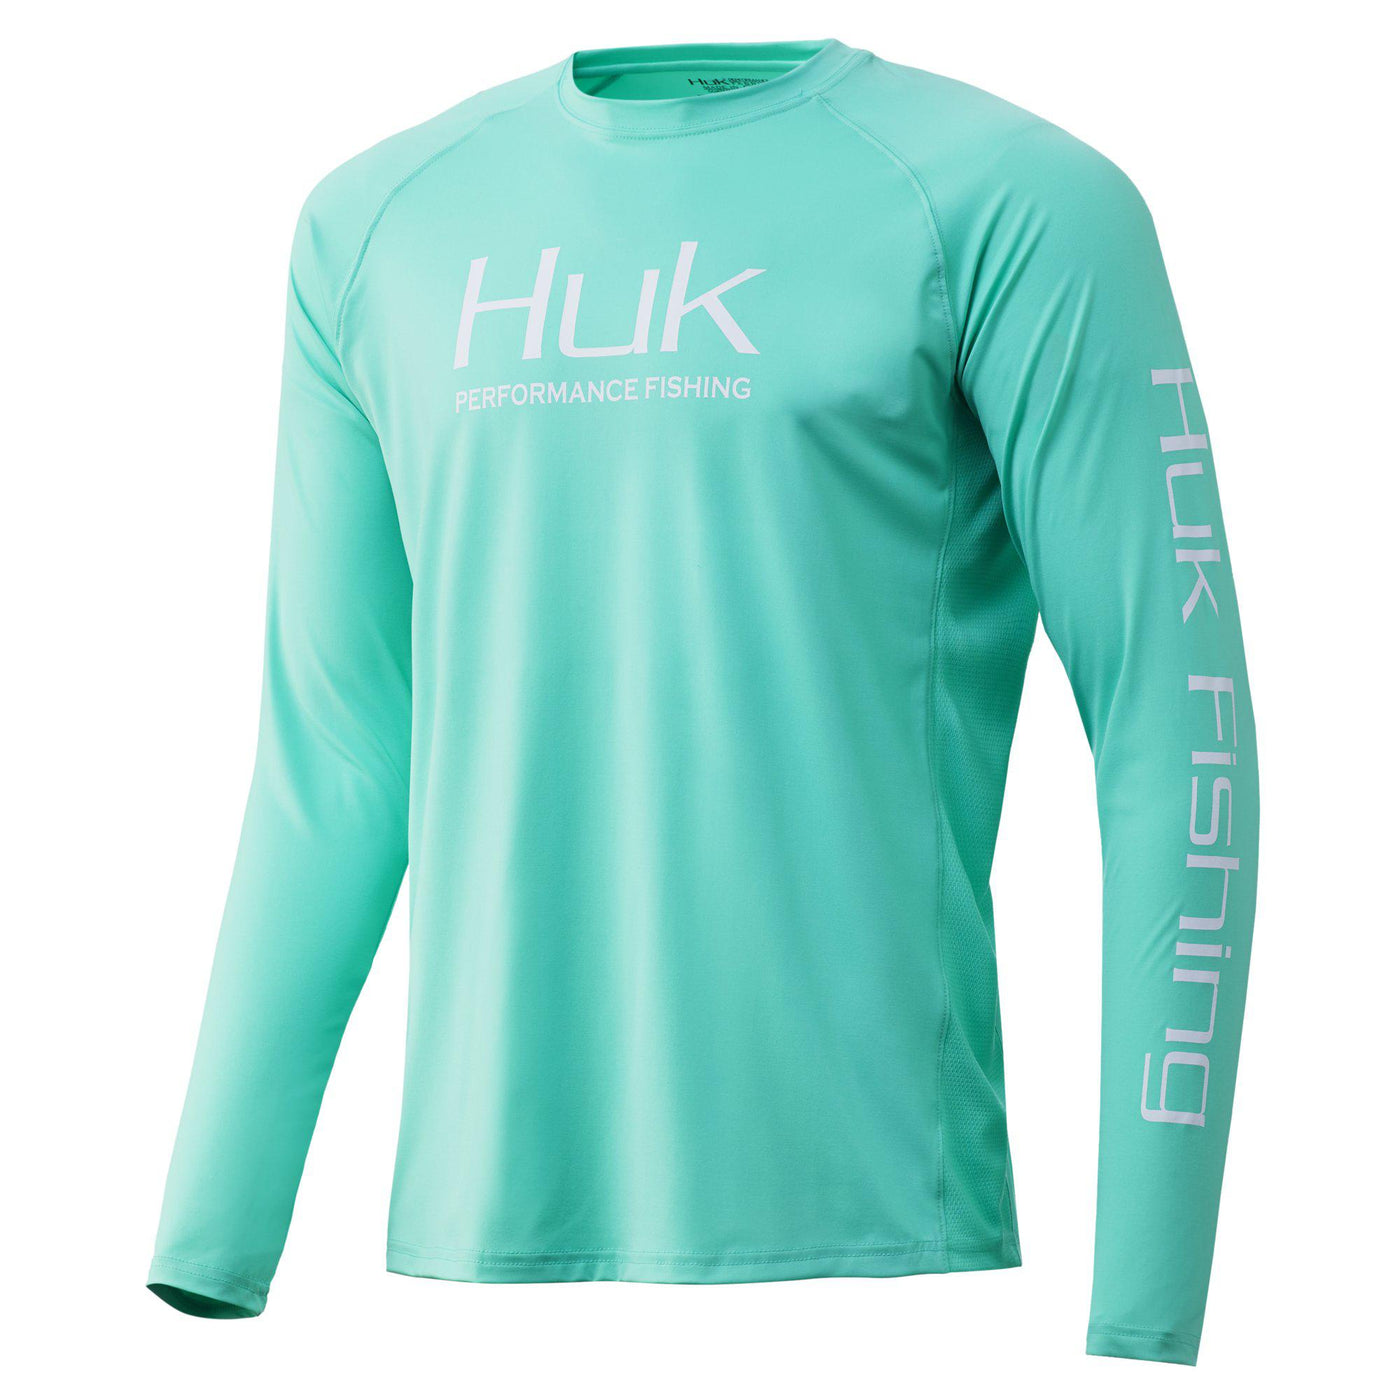 Huk Men's Pursuit Vented Long Sleeve Shirt, Navy, Small